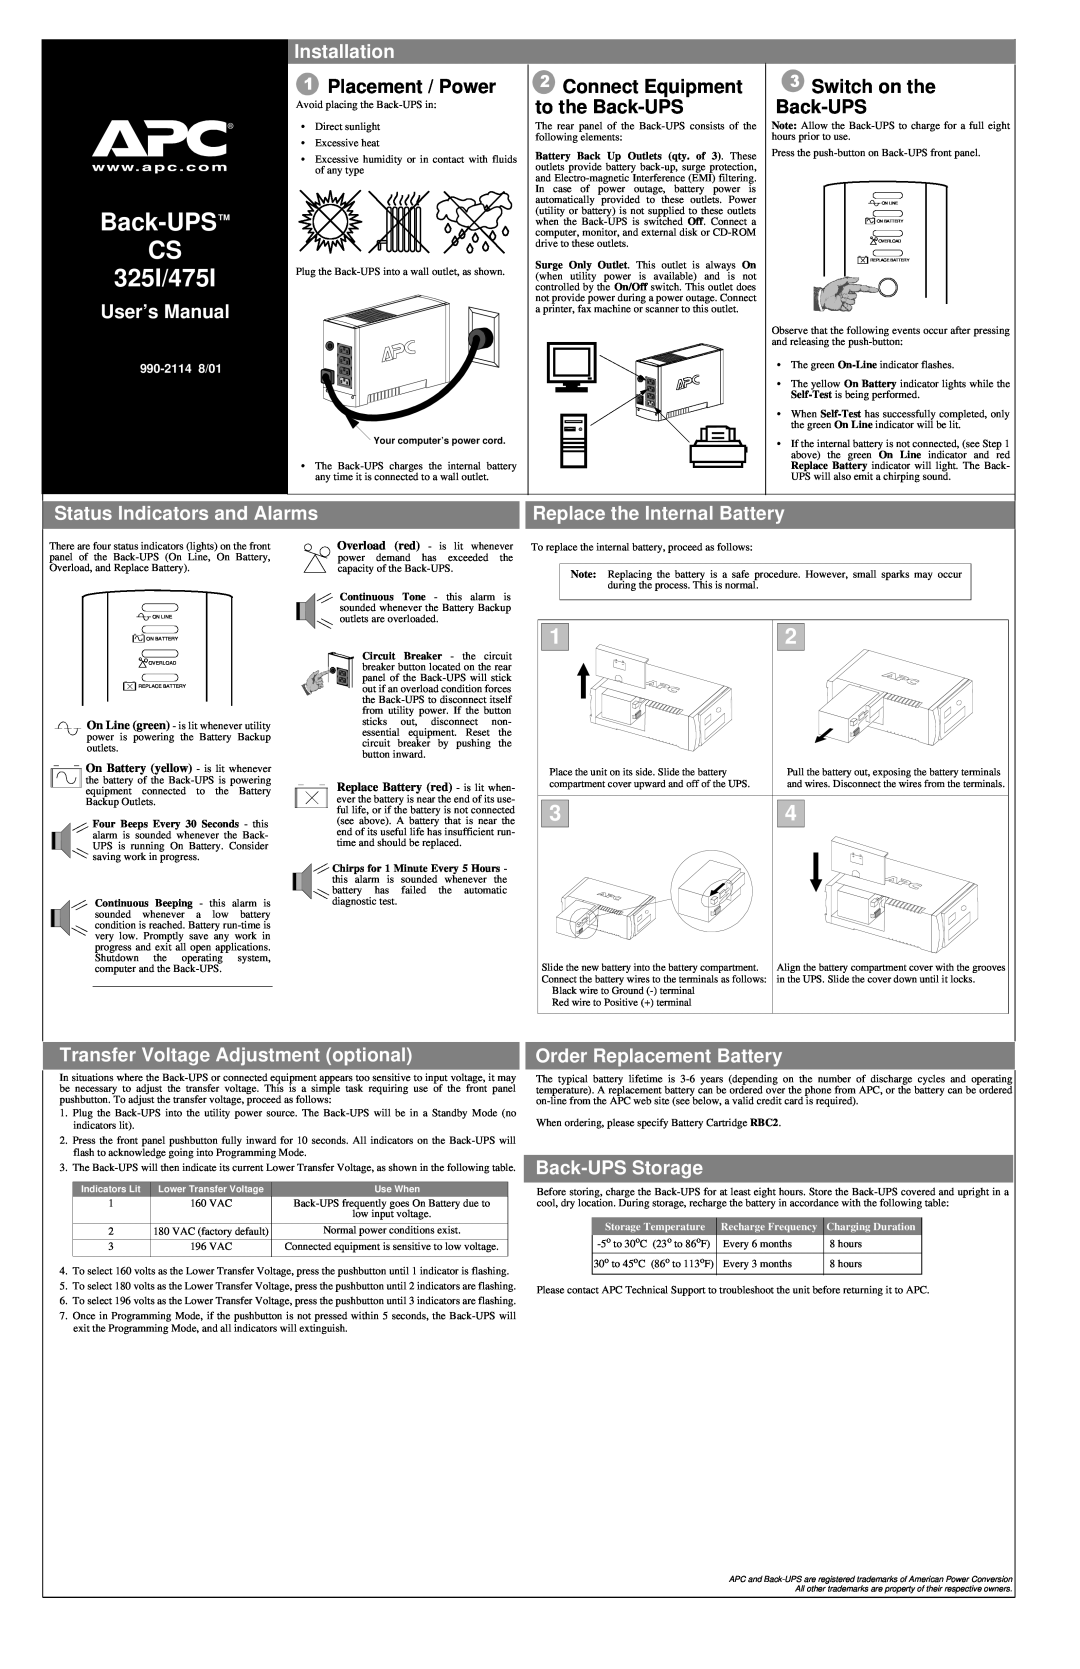 American Power Conversion 325I user manual User’s Manual, Installation, Status Indicators and Alarms, Back-UPS Storage 